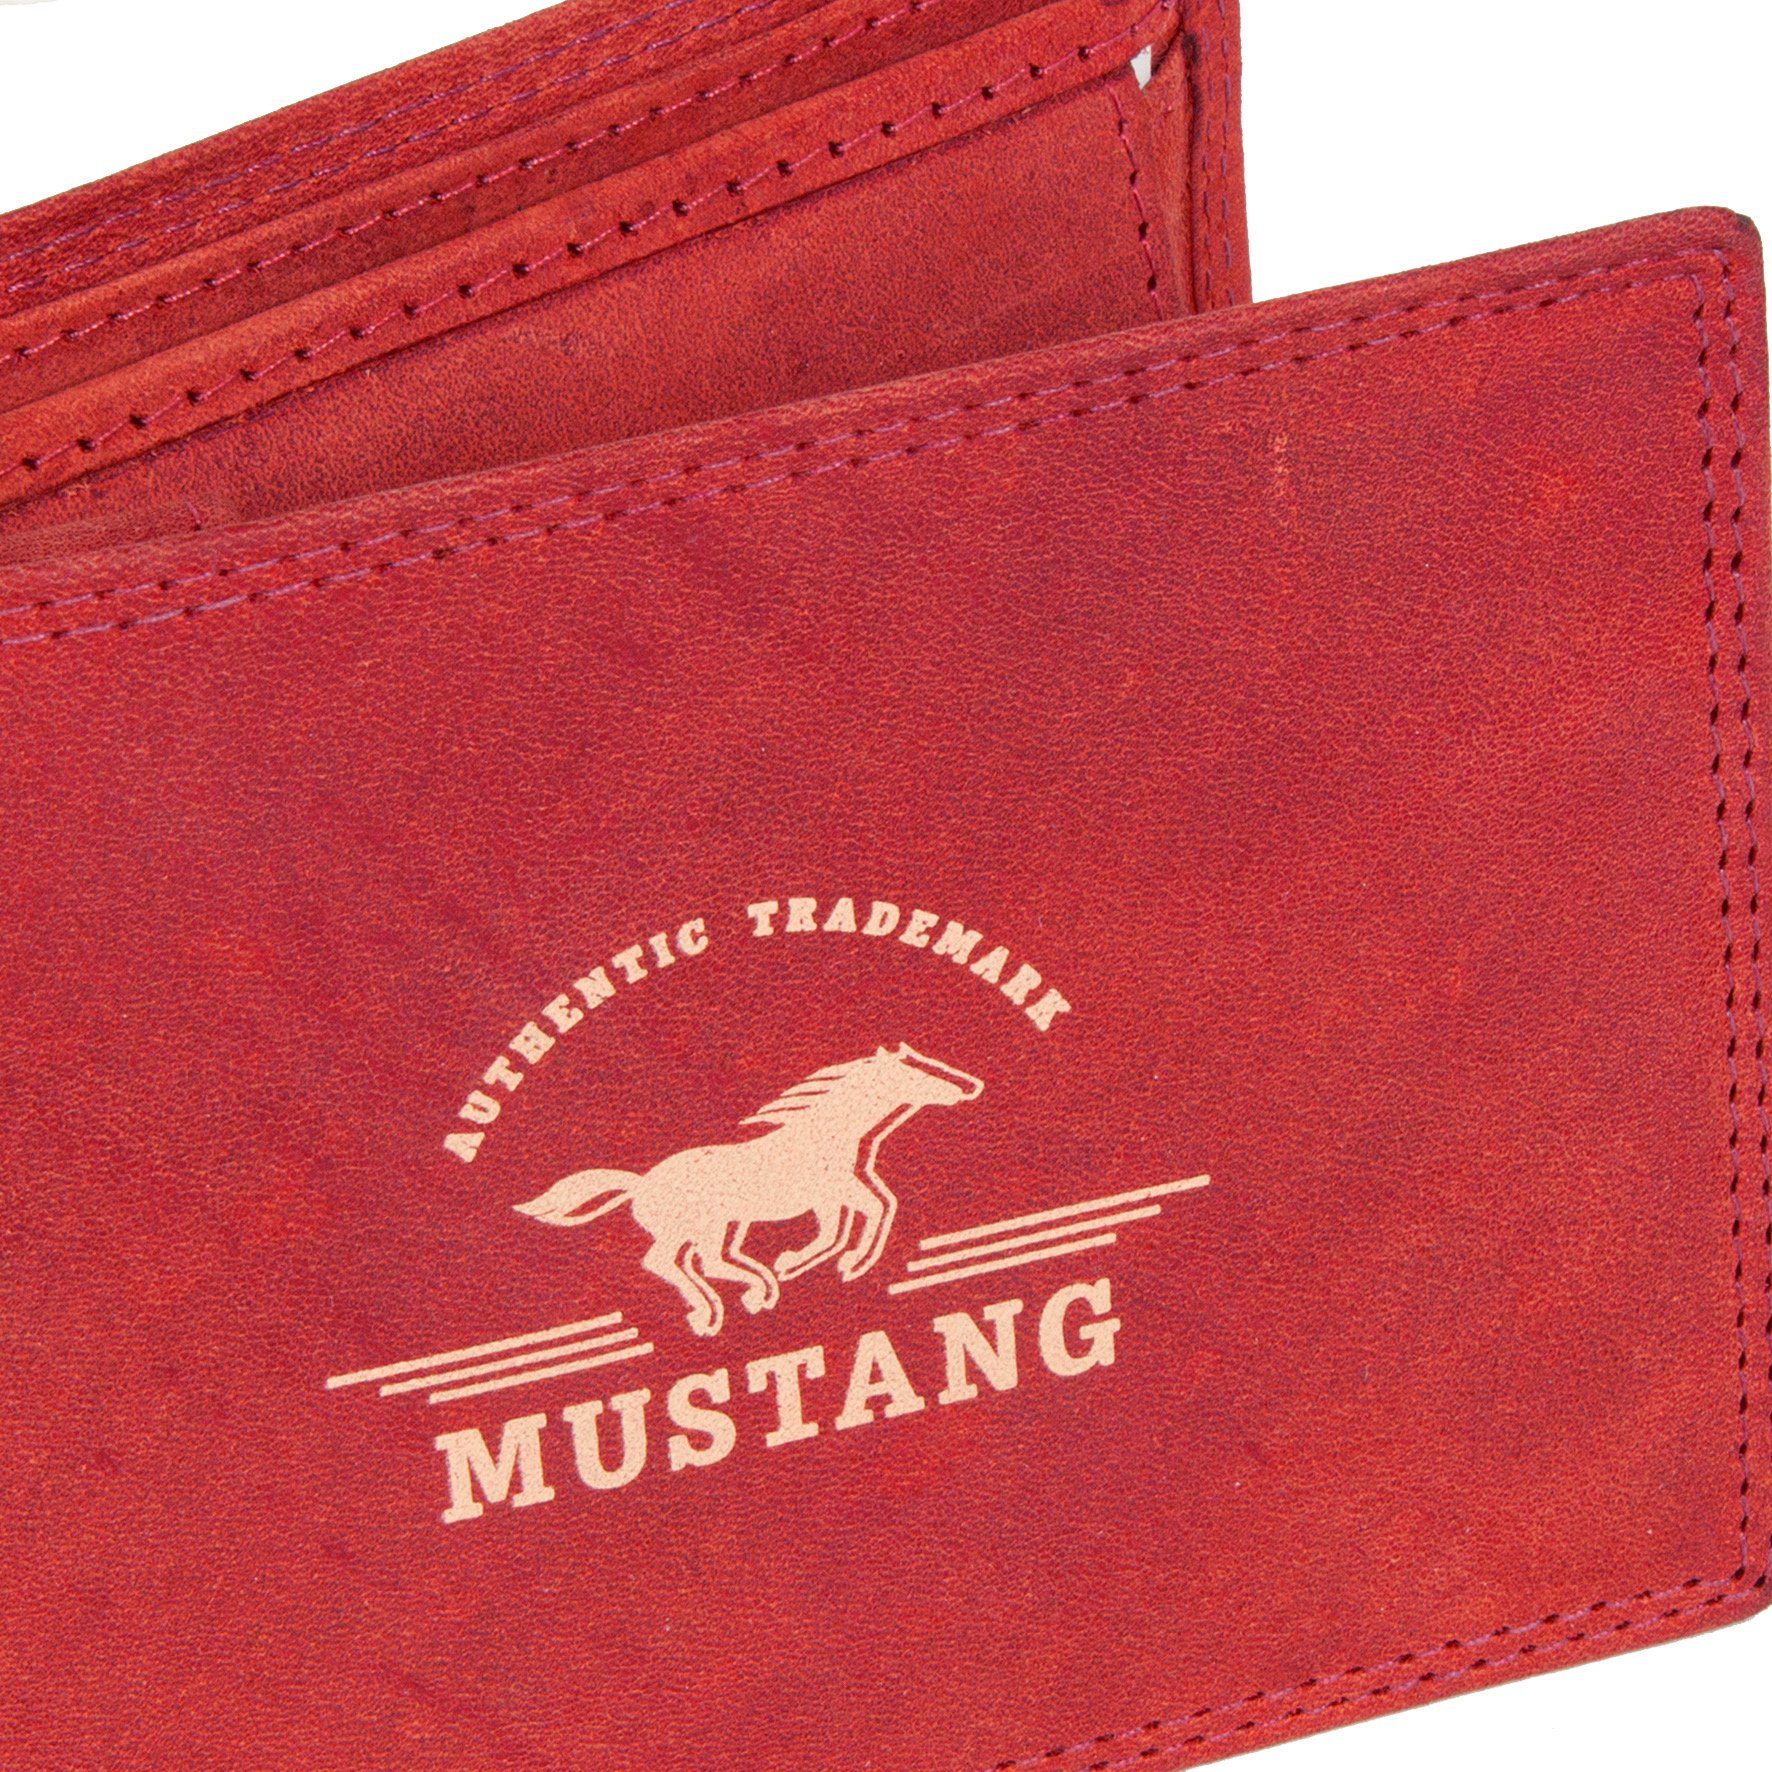 MUSTANG Geldbörse Tampa Logo side mit leather Print wallet red long opening